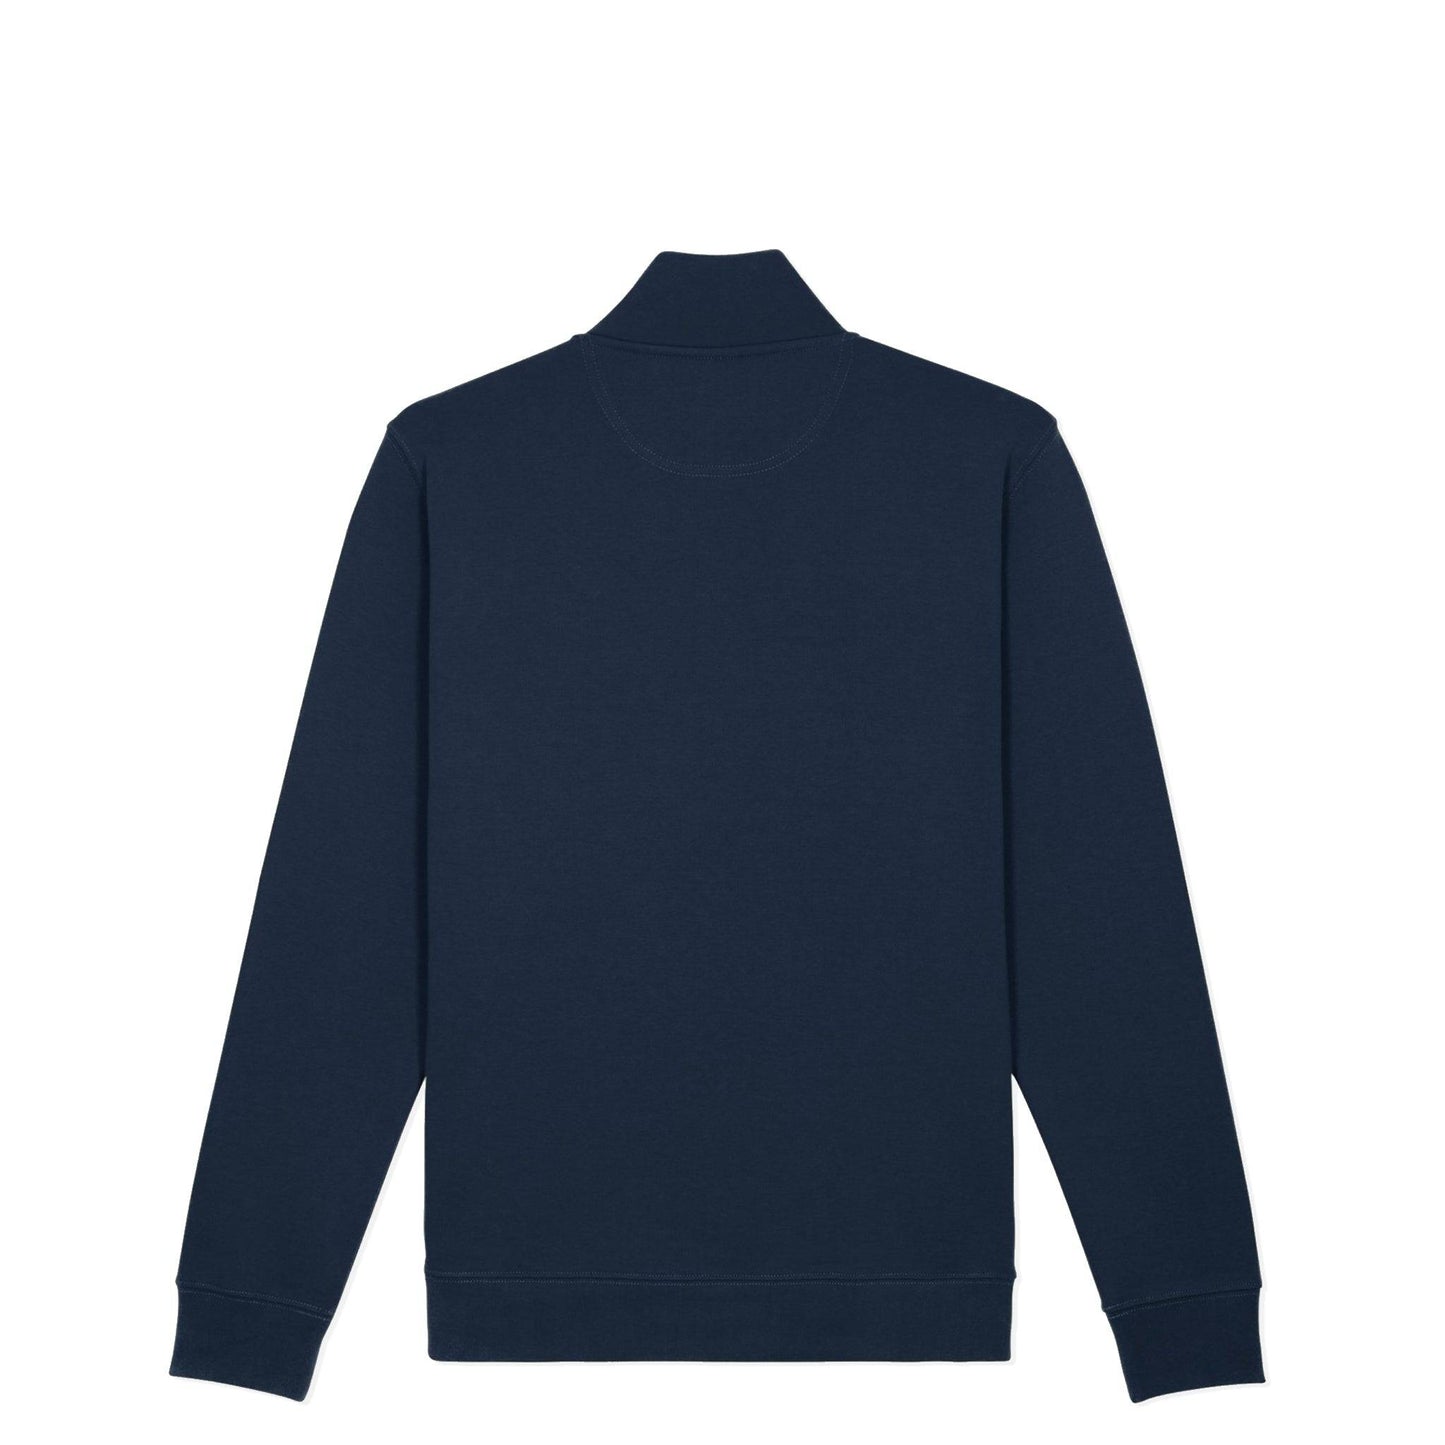 Tribe Core Navy Quarter Zip Sweatshirt - Organic Cotton - One Choice Apparel